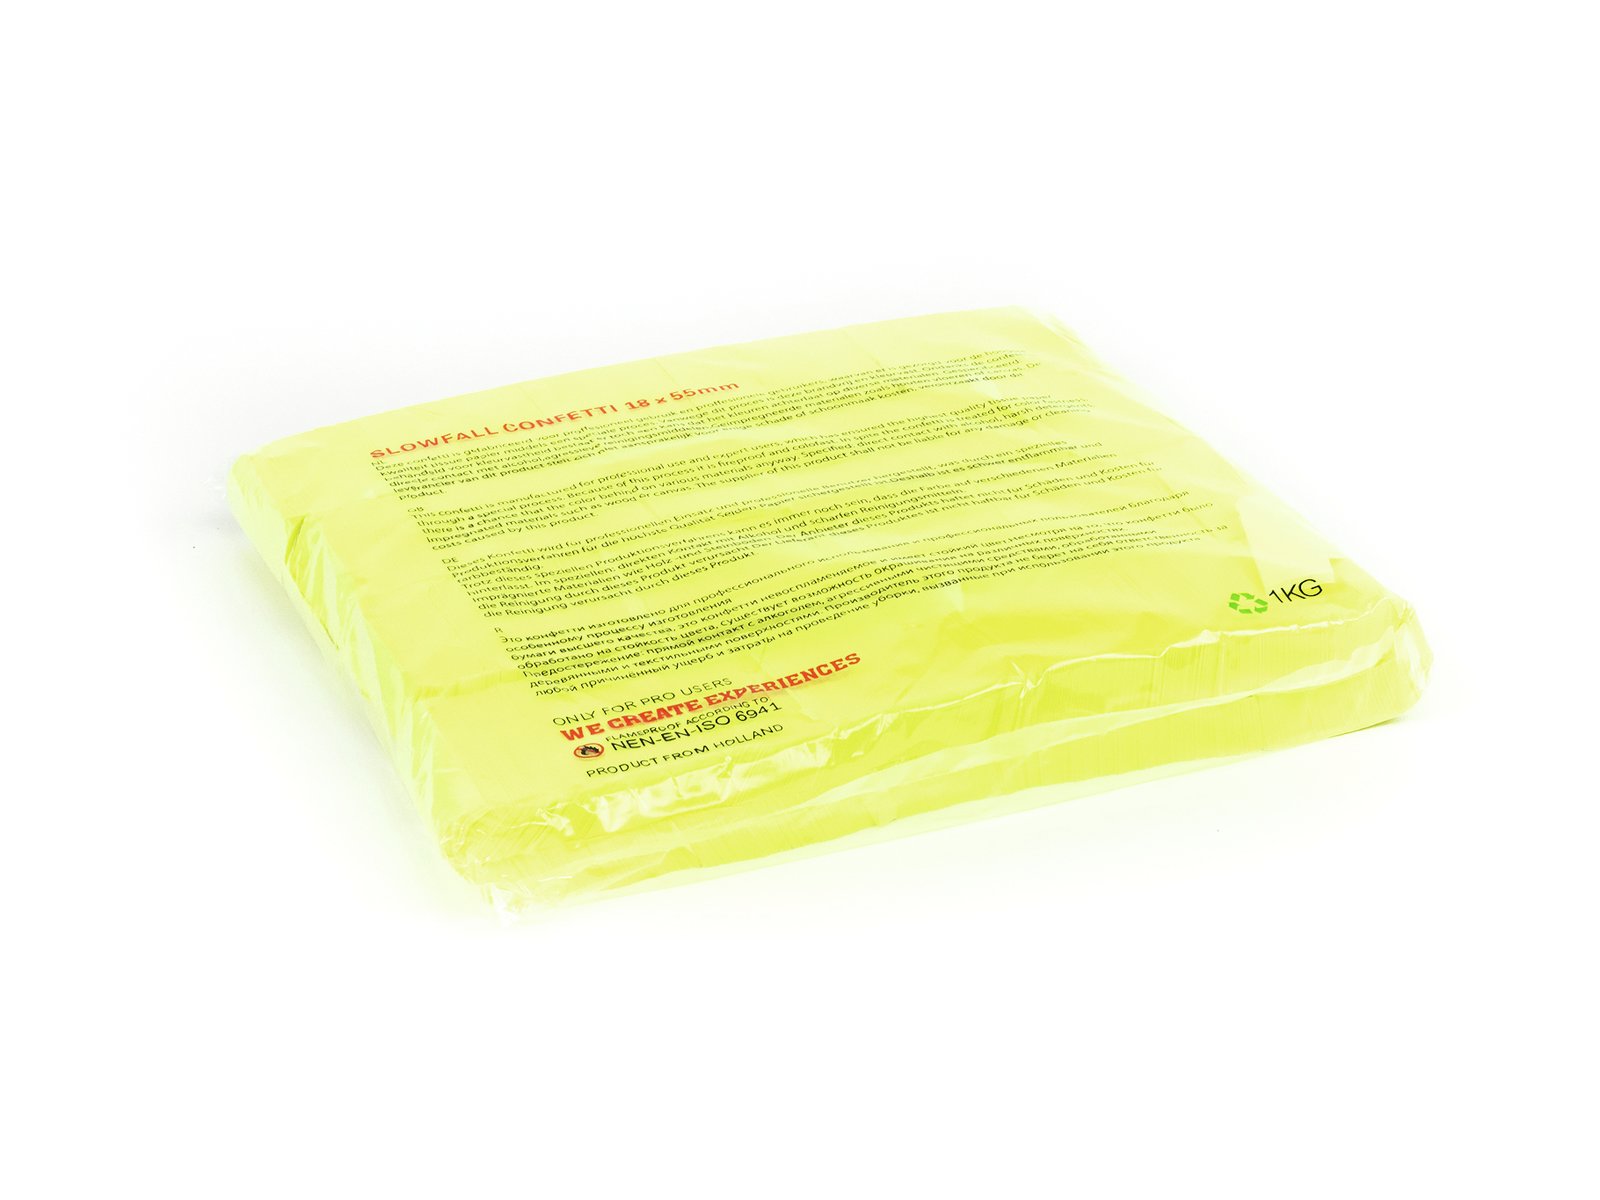 TCM FX Slowfall Confetti rectangular 55x18mm, neon-yellow, uv active, 1kg